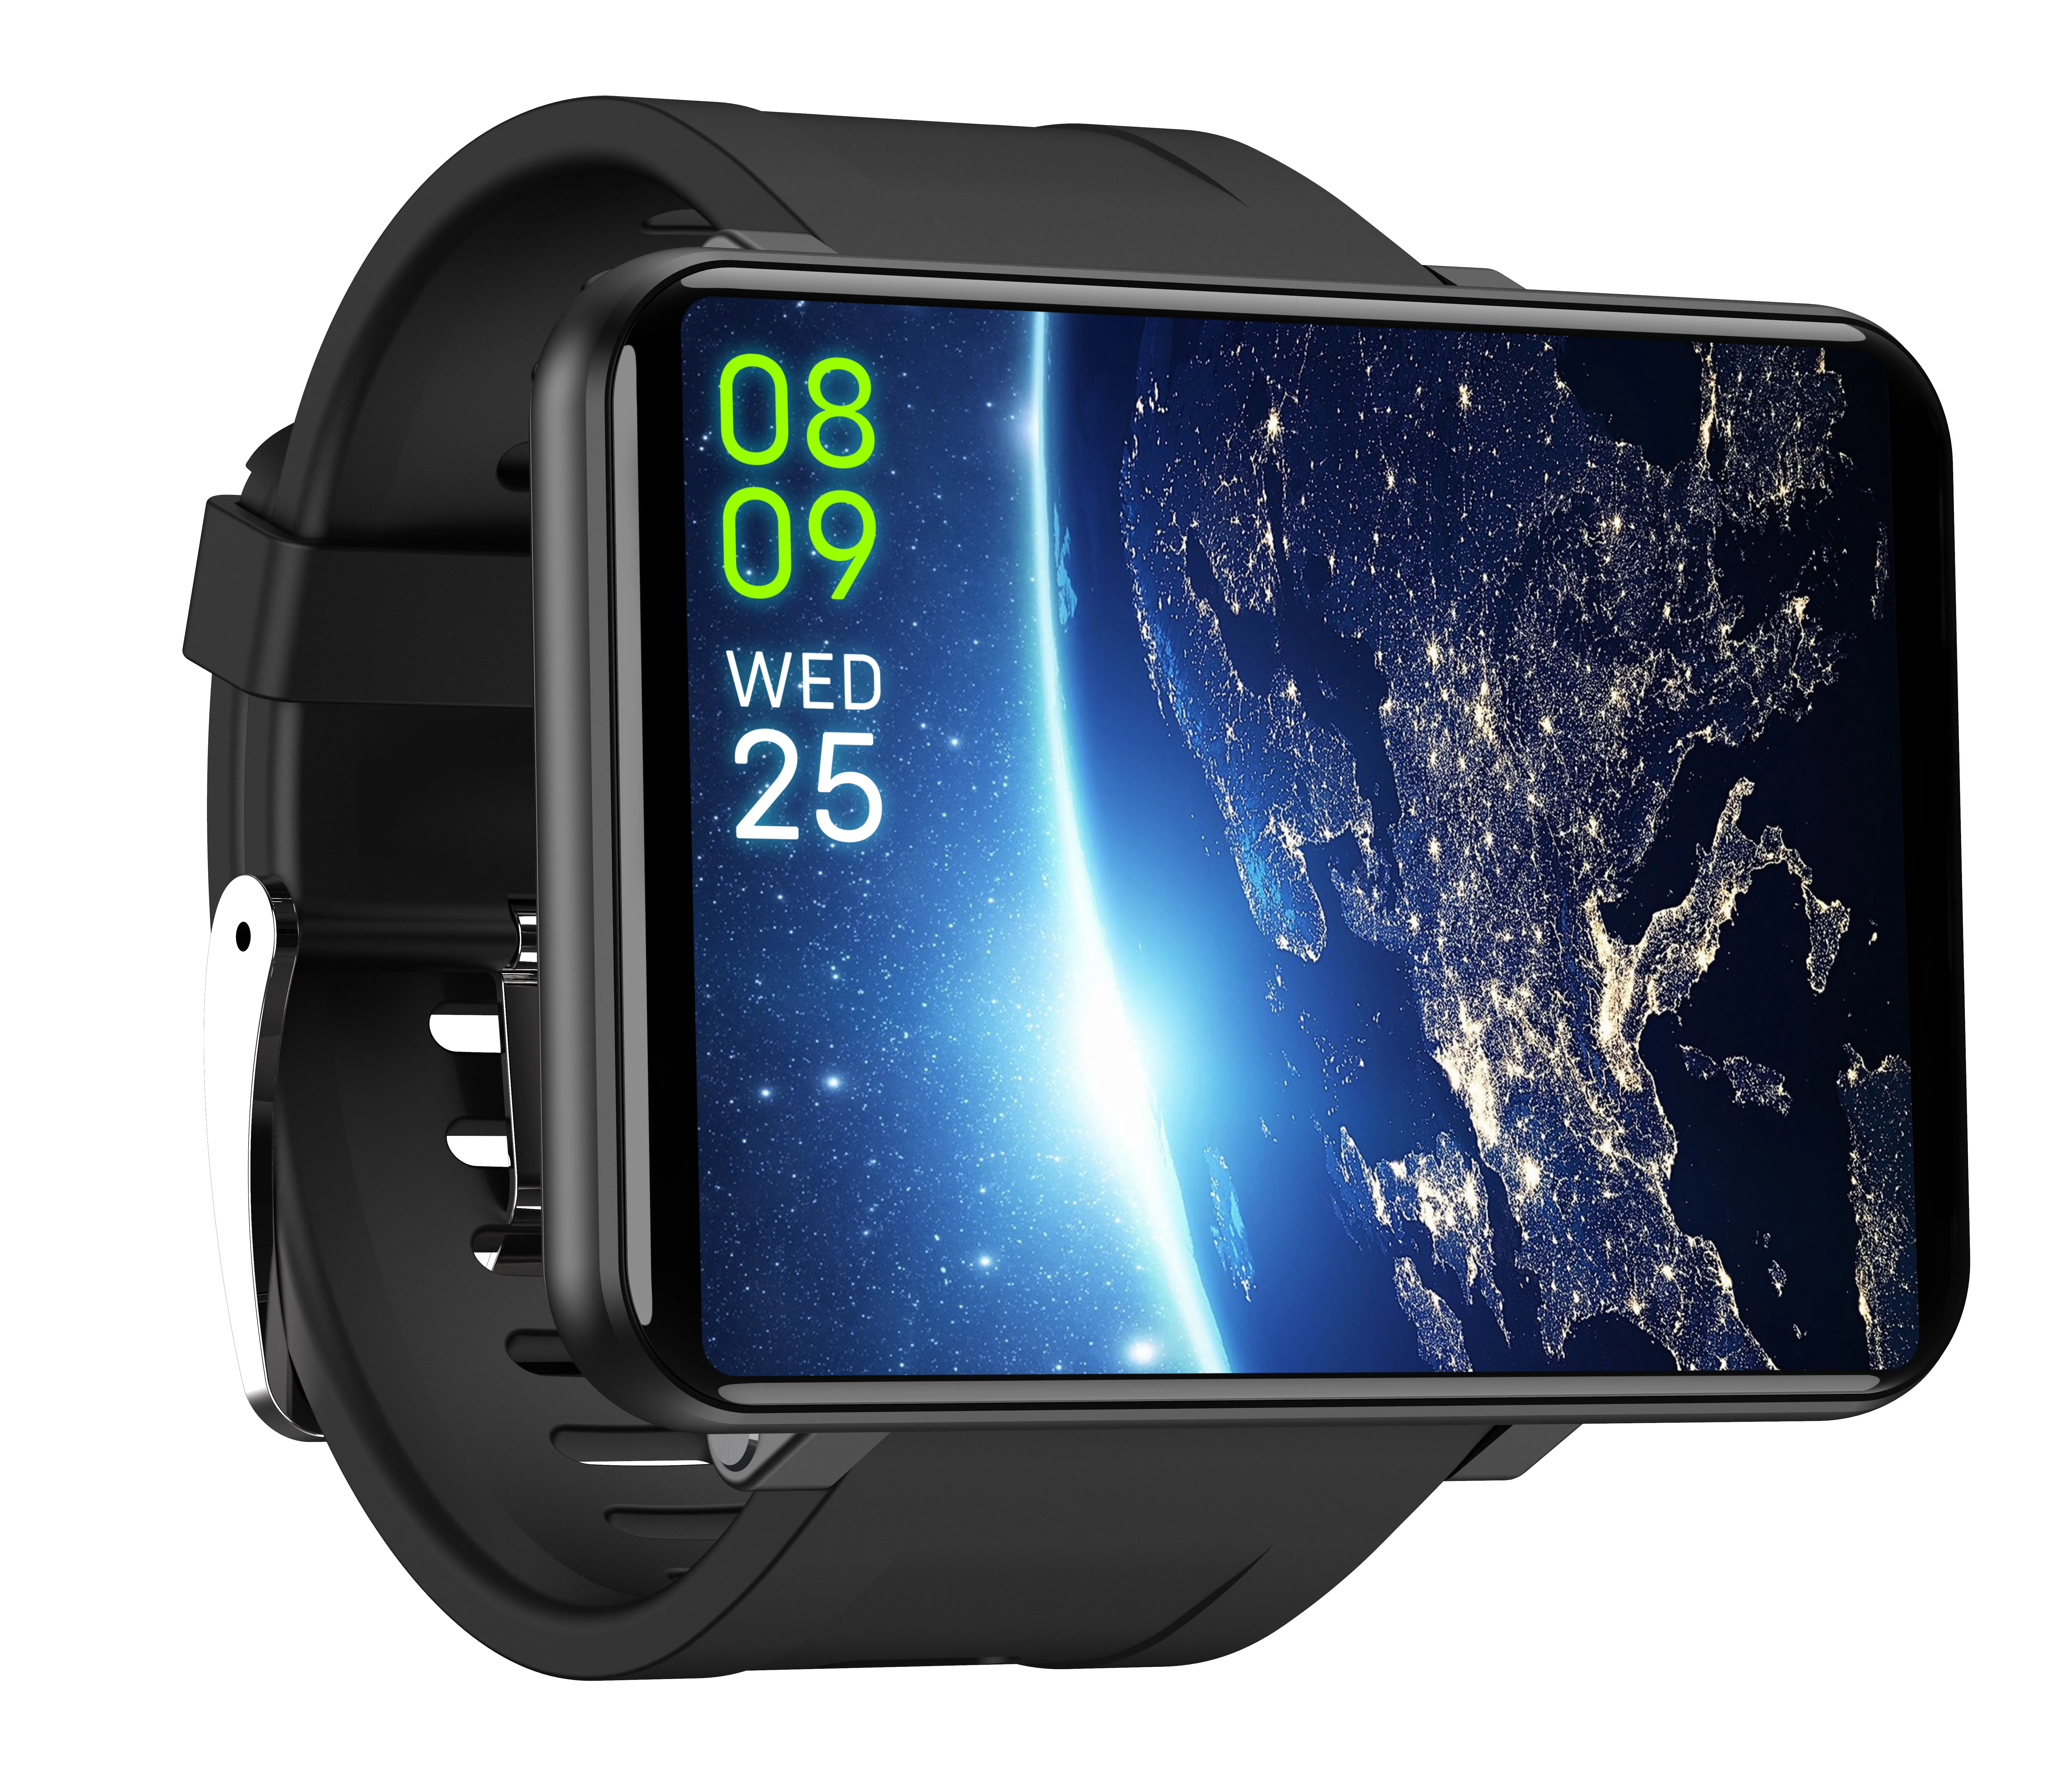 touch screen smart watch phone